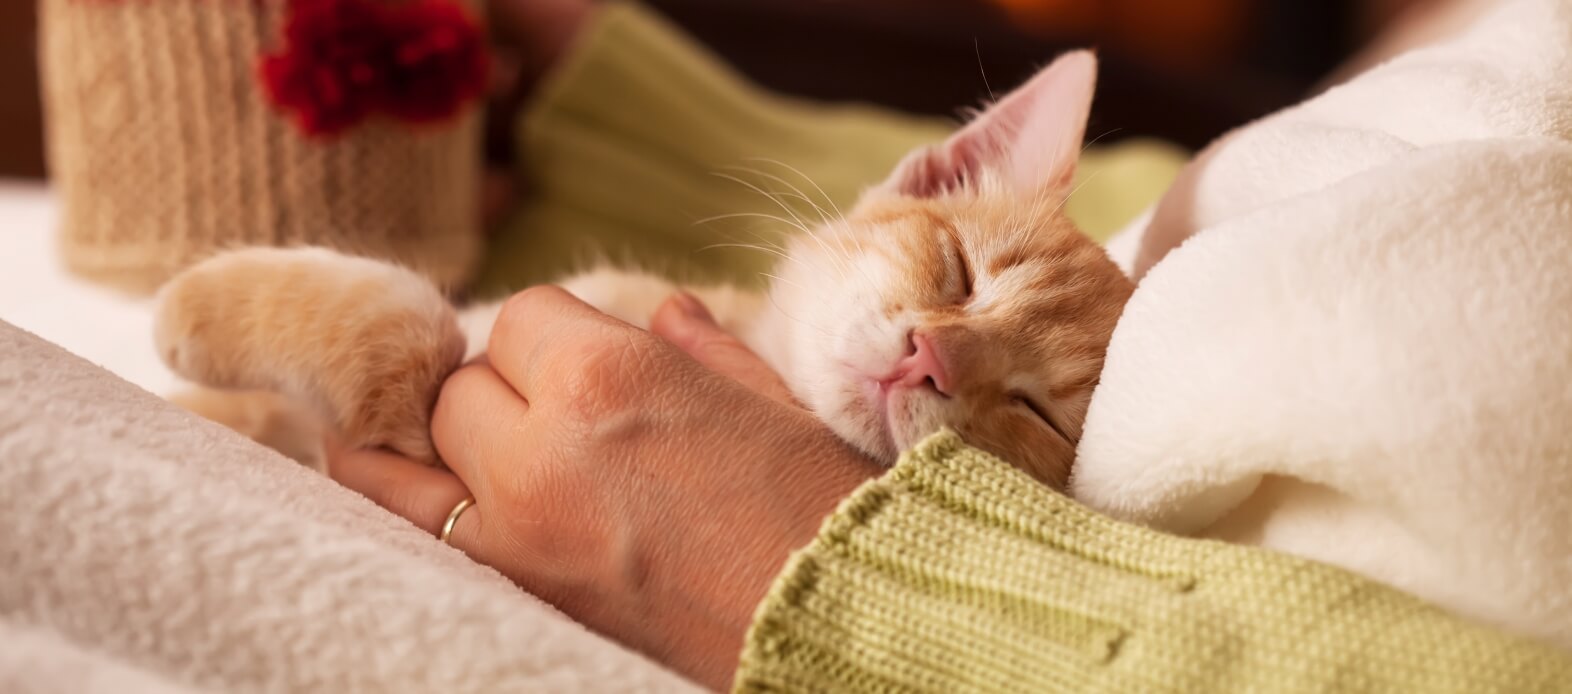 terapia cu pisici beneficii sanatatea mintala